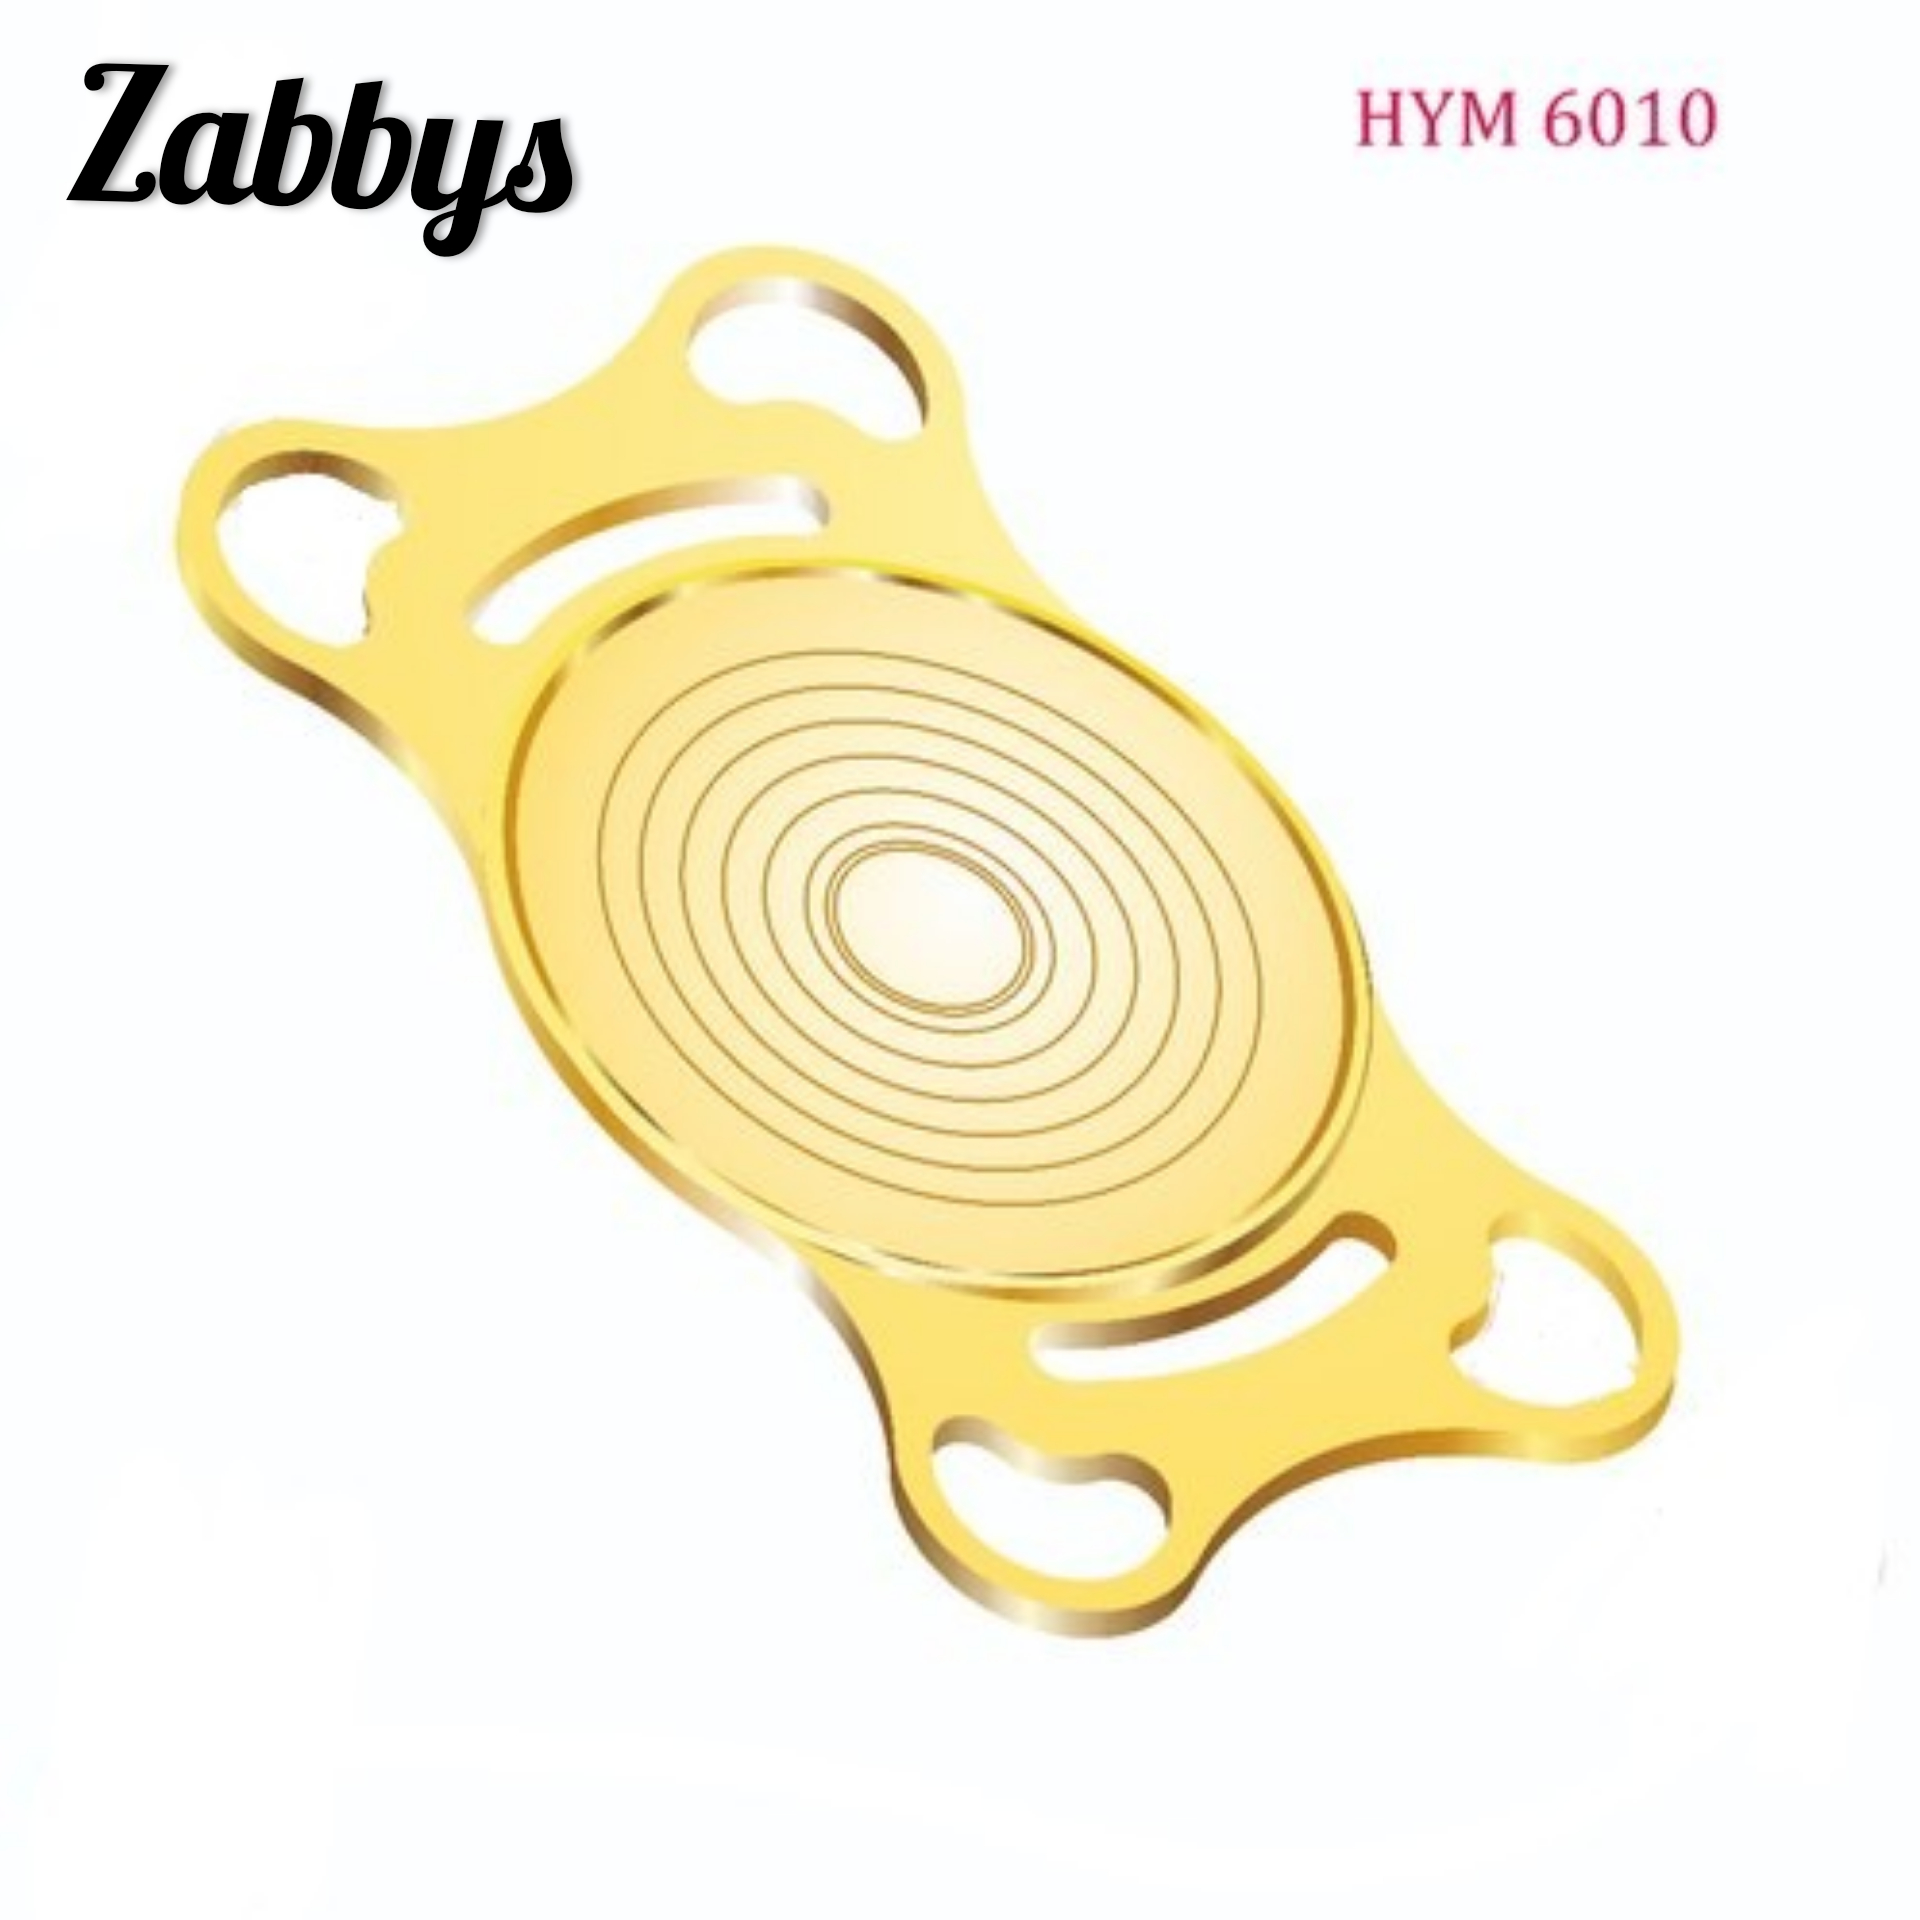 Zabbys Yellow Hydrophobic Acrylic Multifocal/ Tori